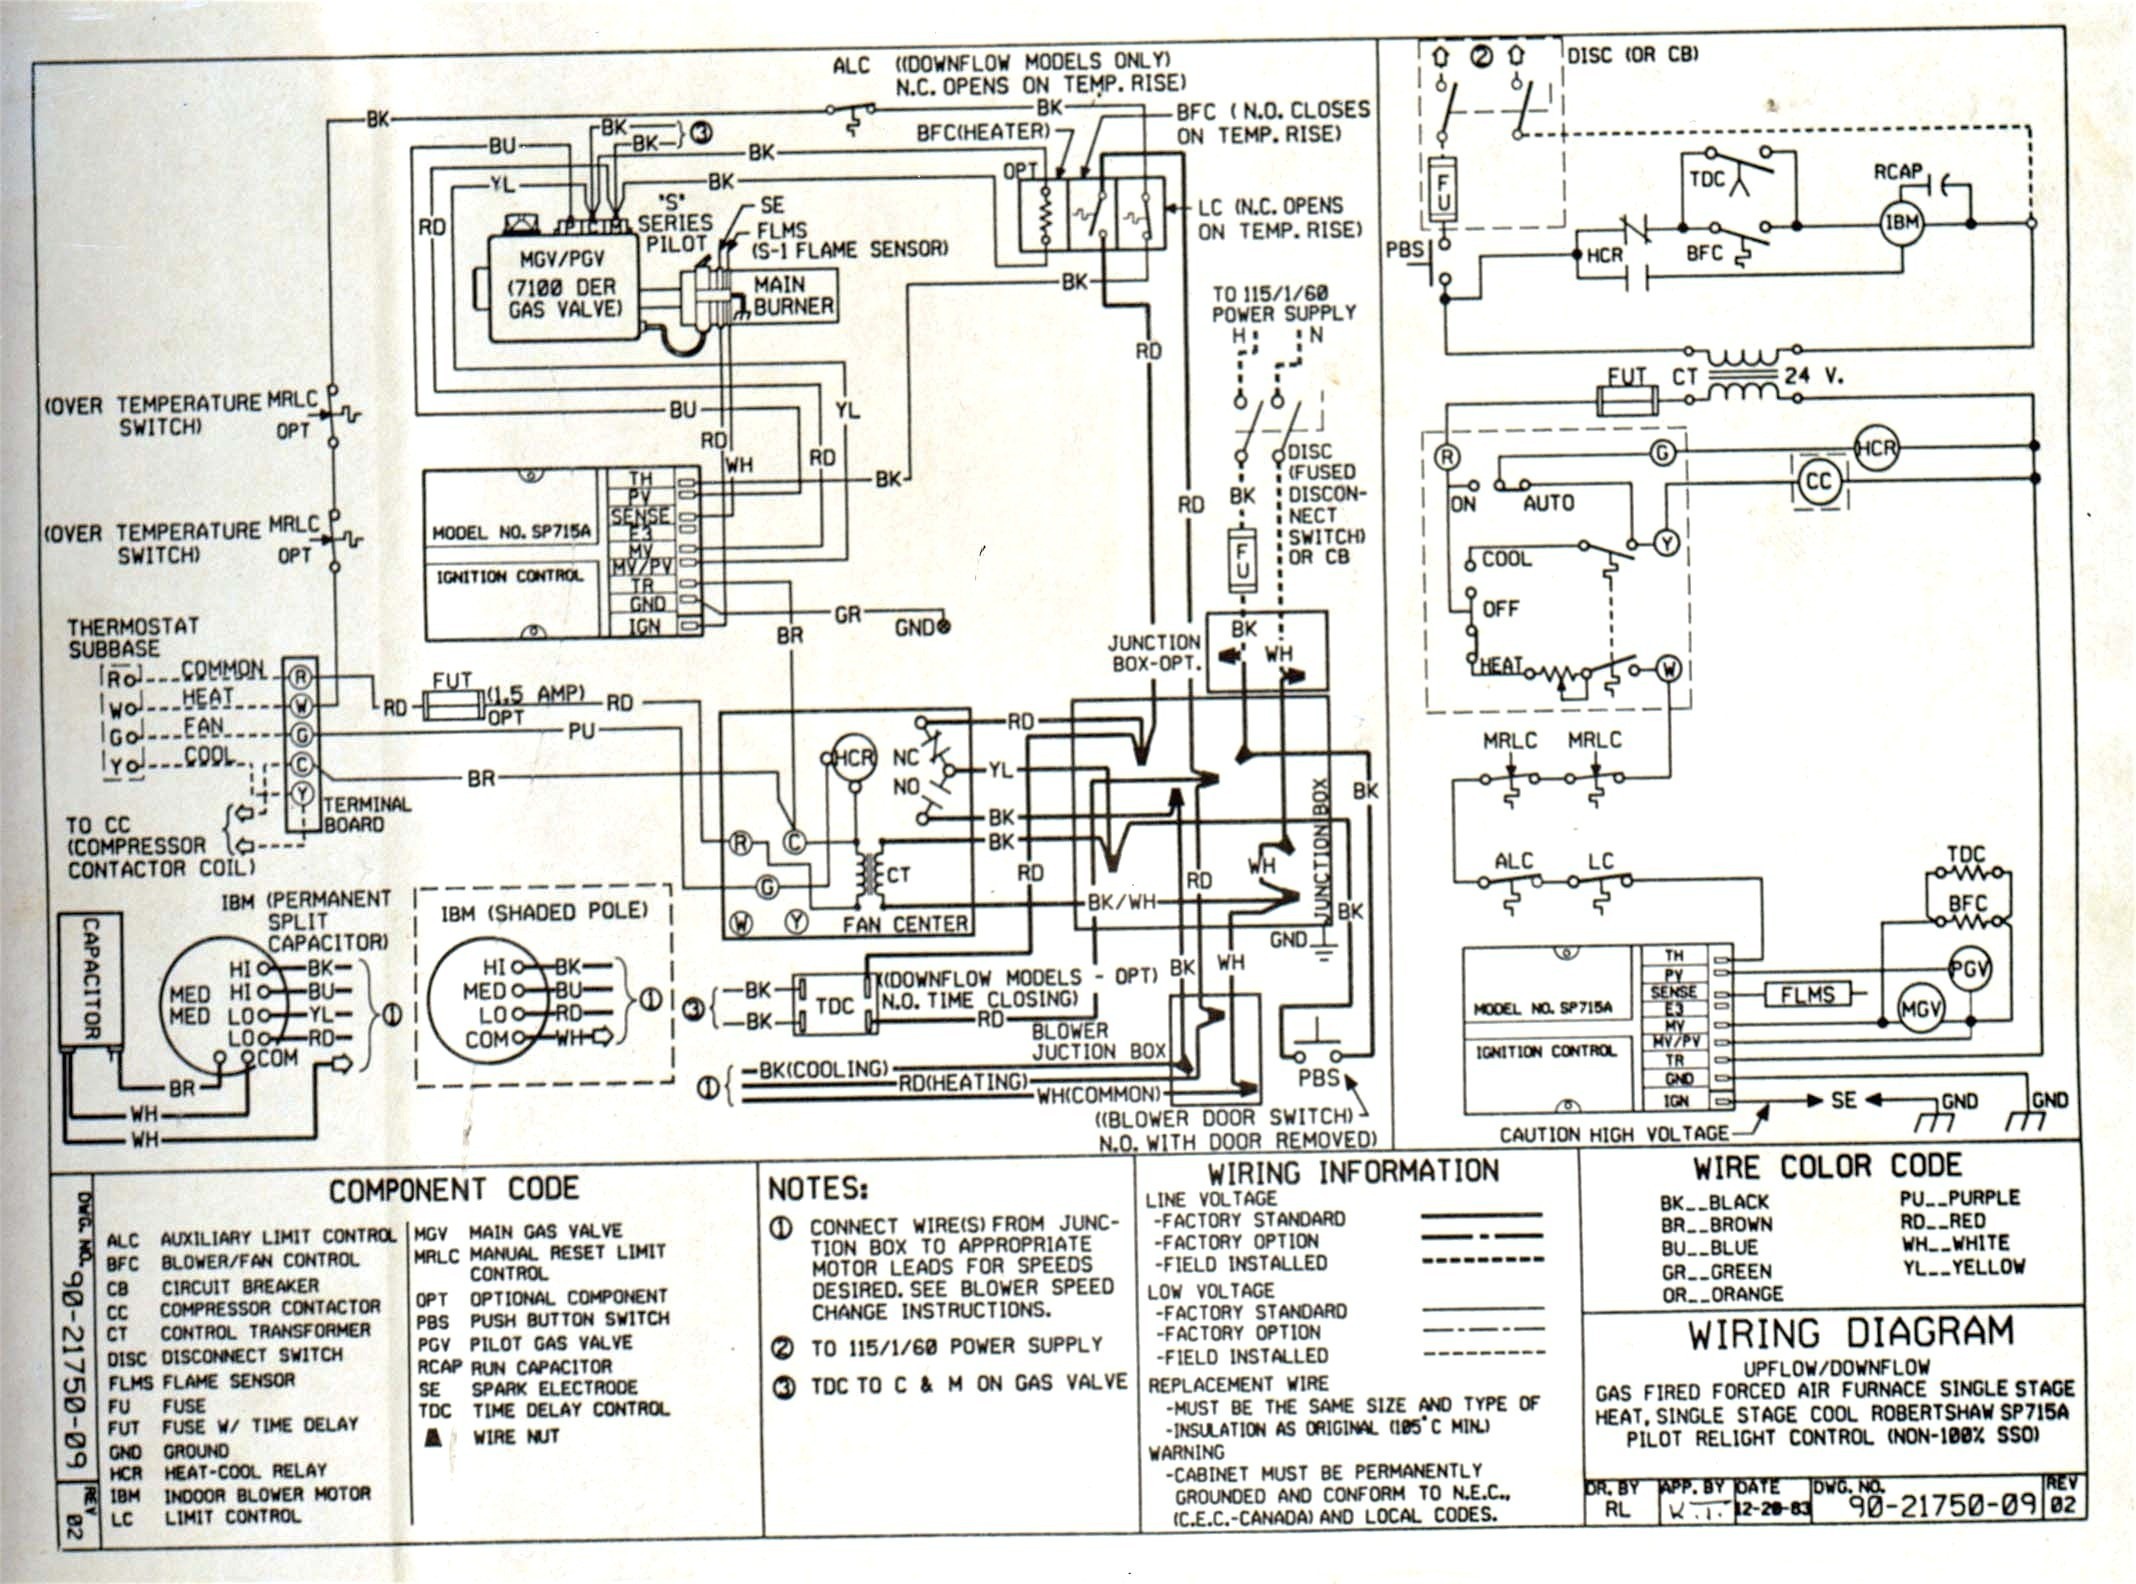 Simple Diagram Of Car Parts New Wiring Diagram Car Ac Of Simple Diagram Of Car Parts